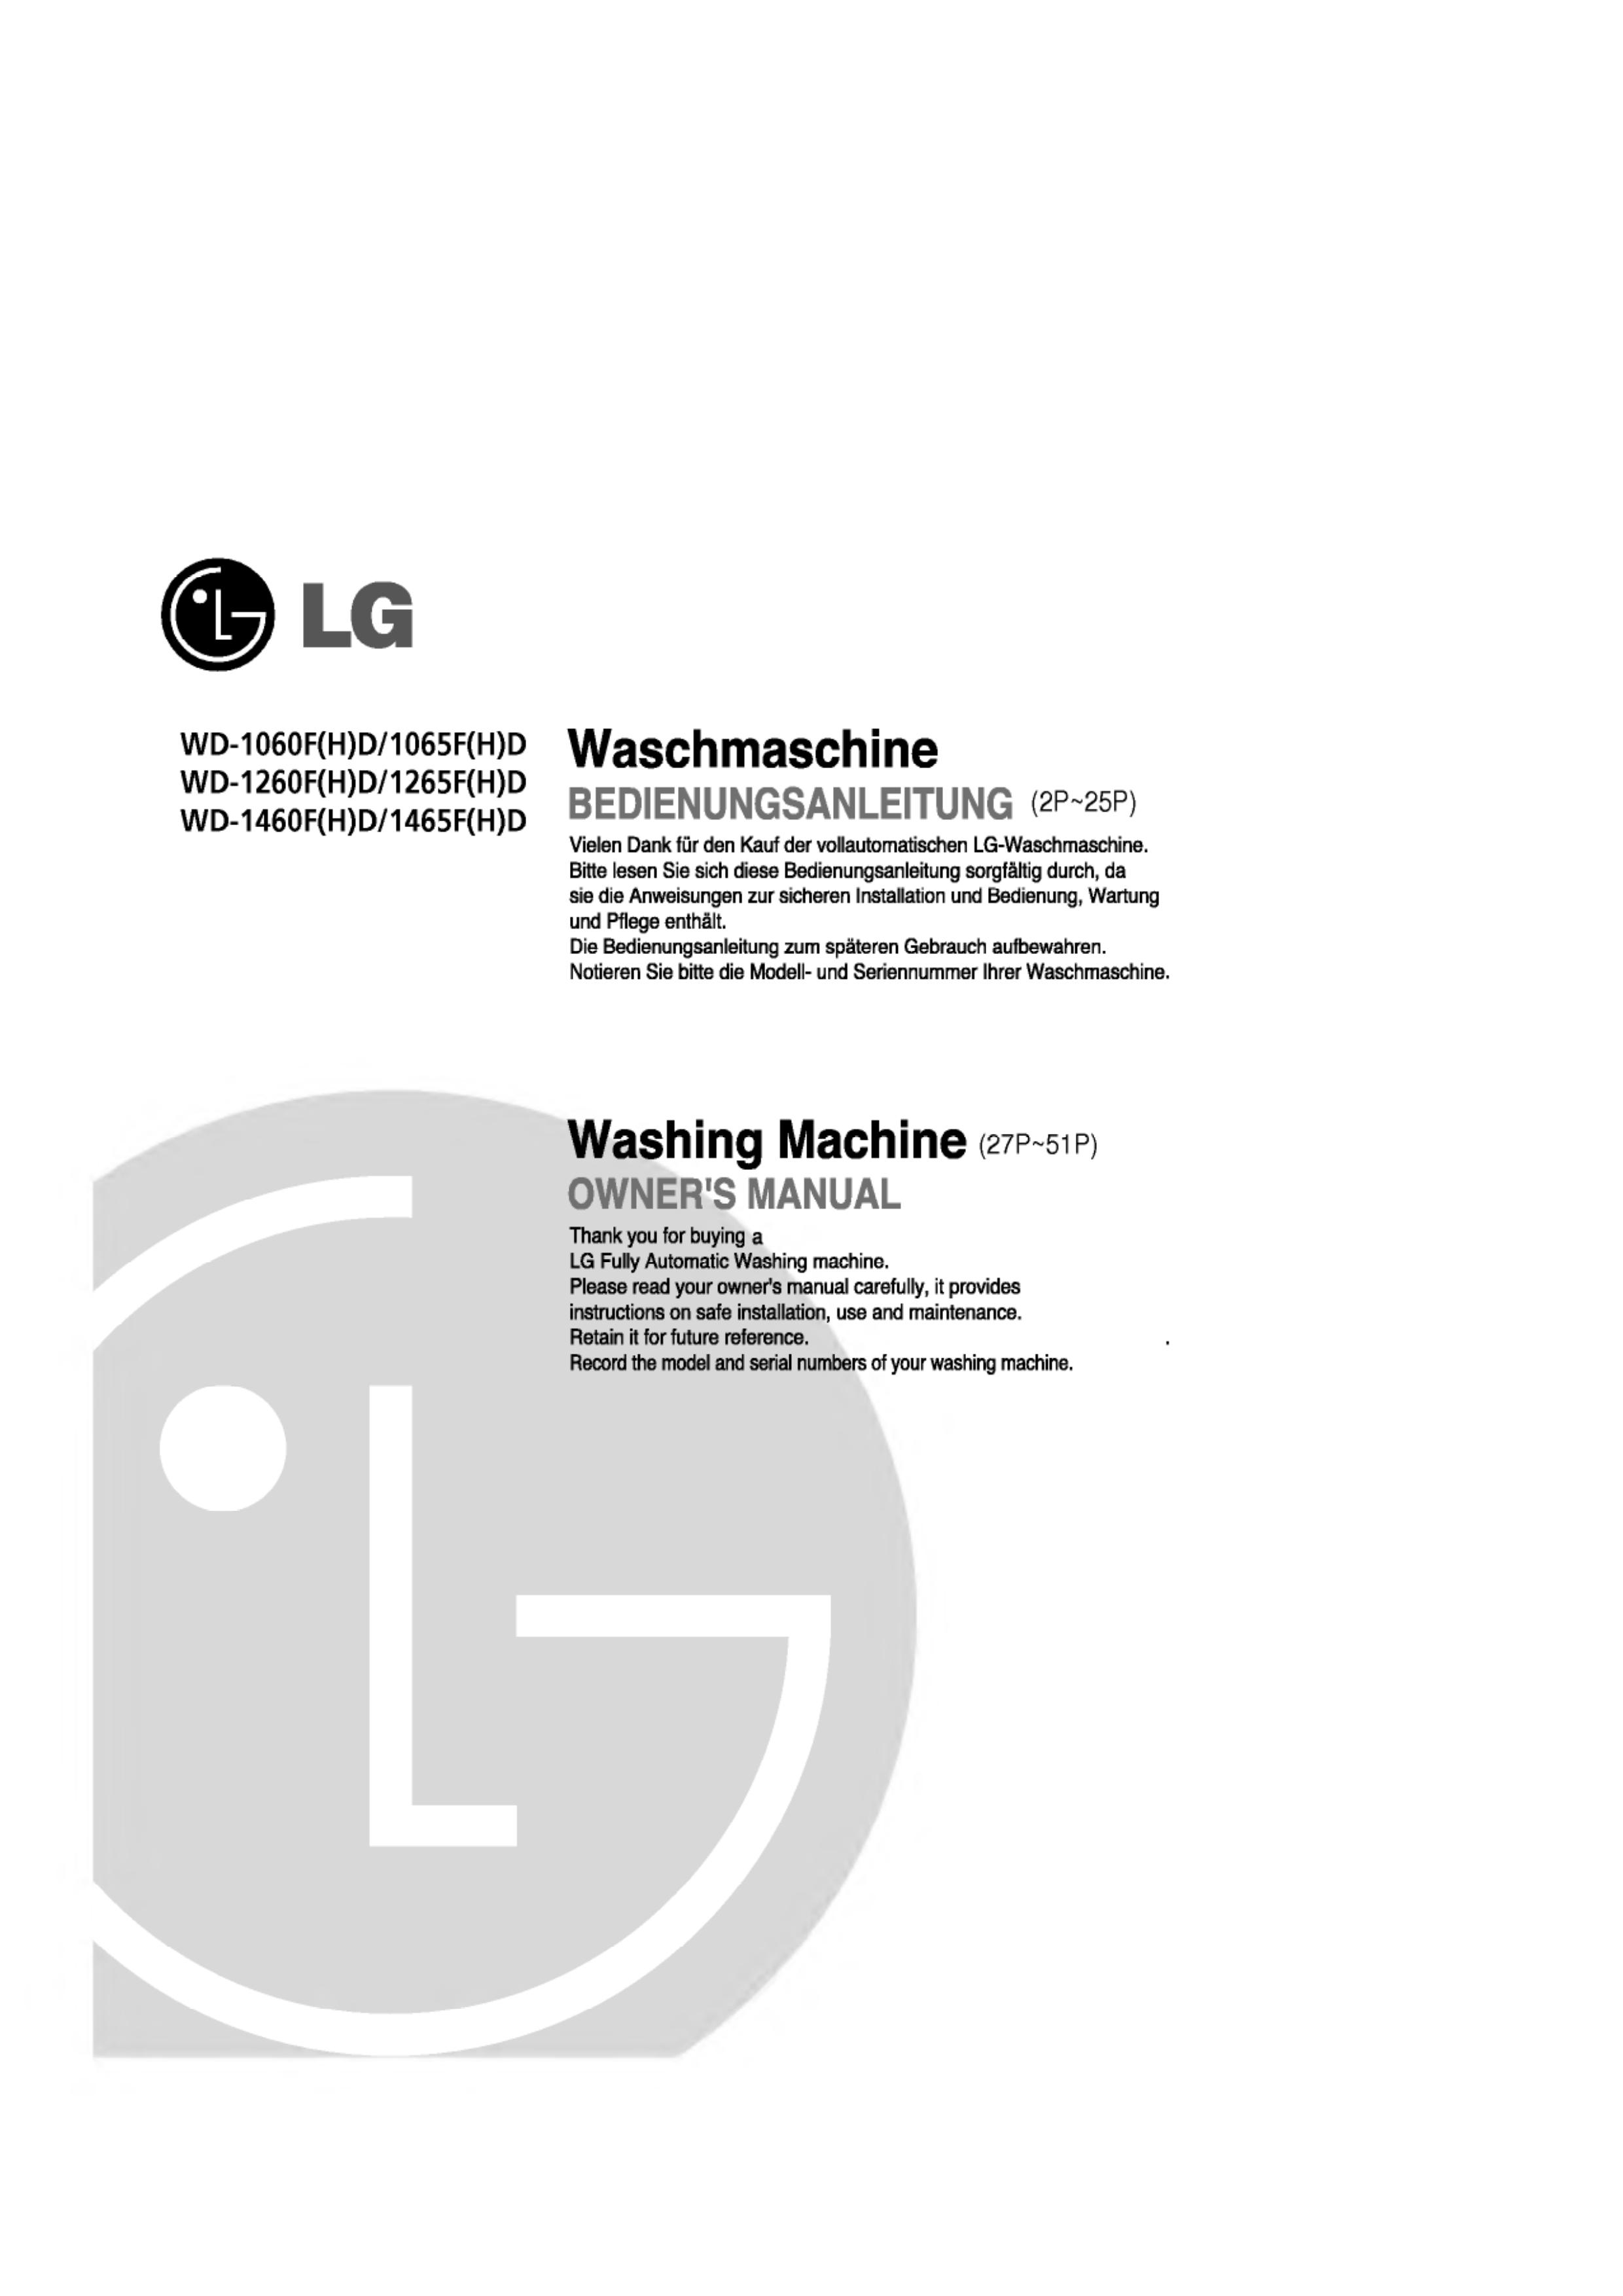 LG Electronics 1265F(H)D Washer User Manual